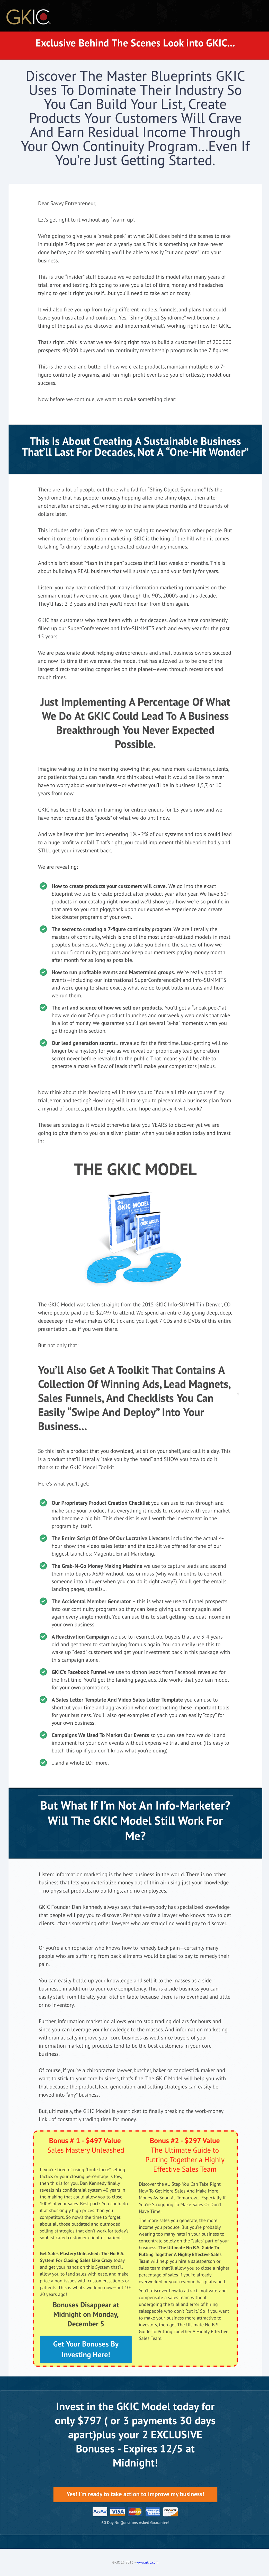 GKIC Model